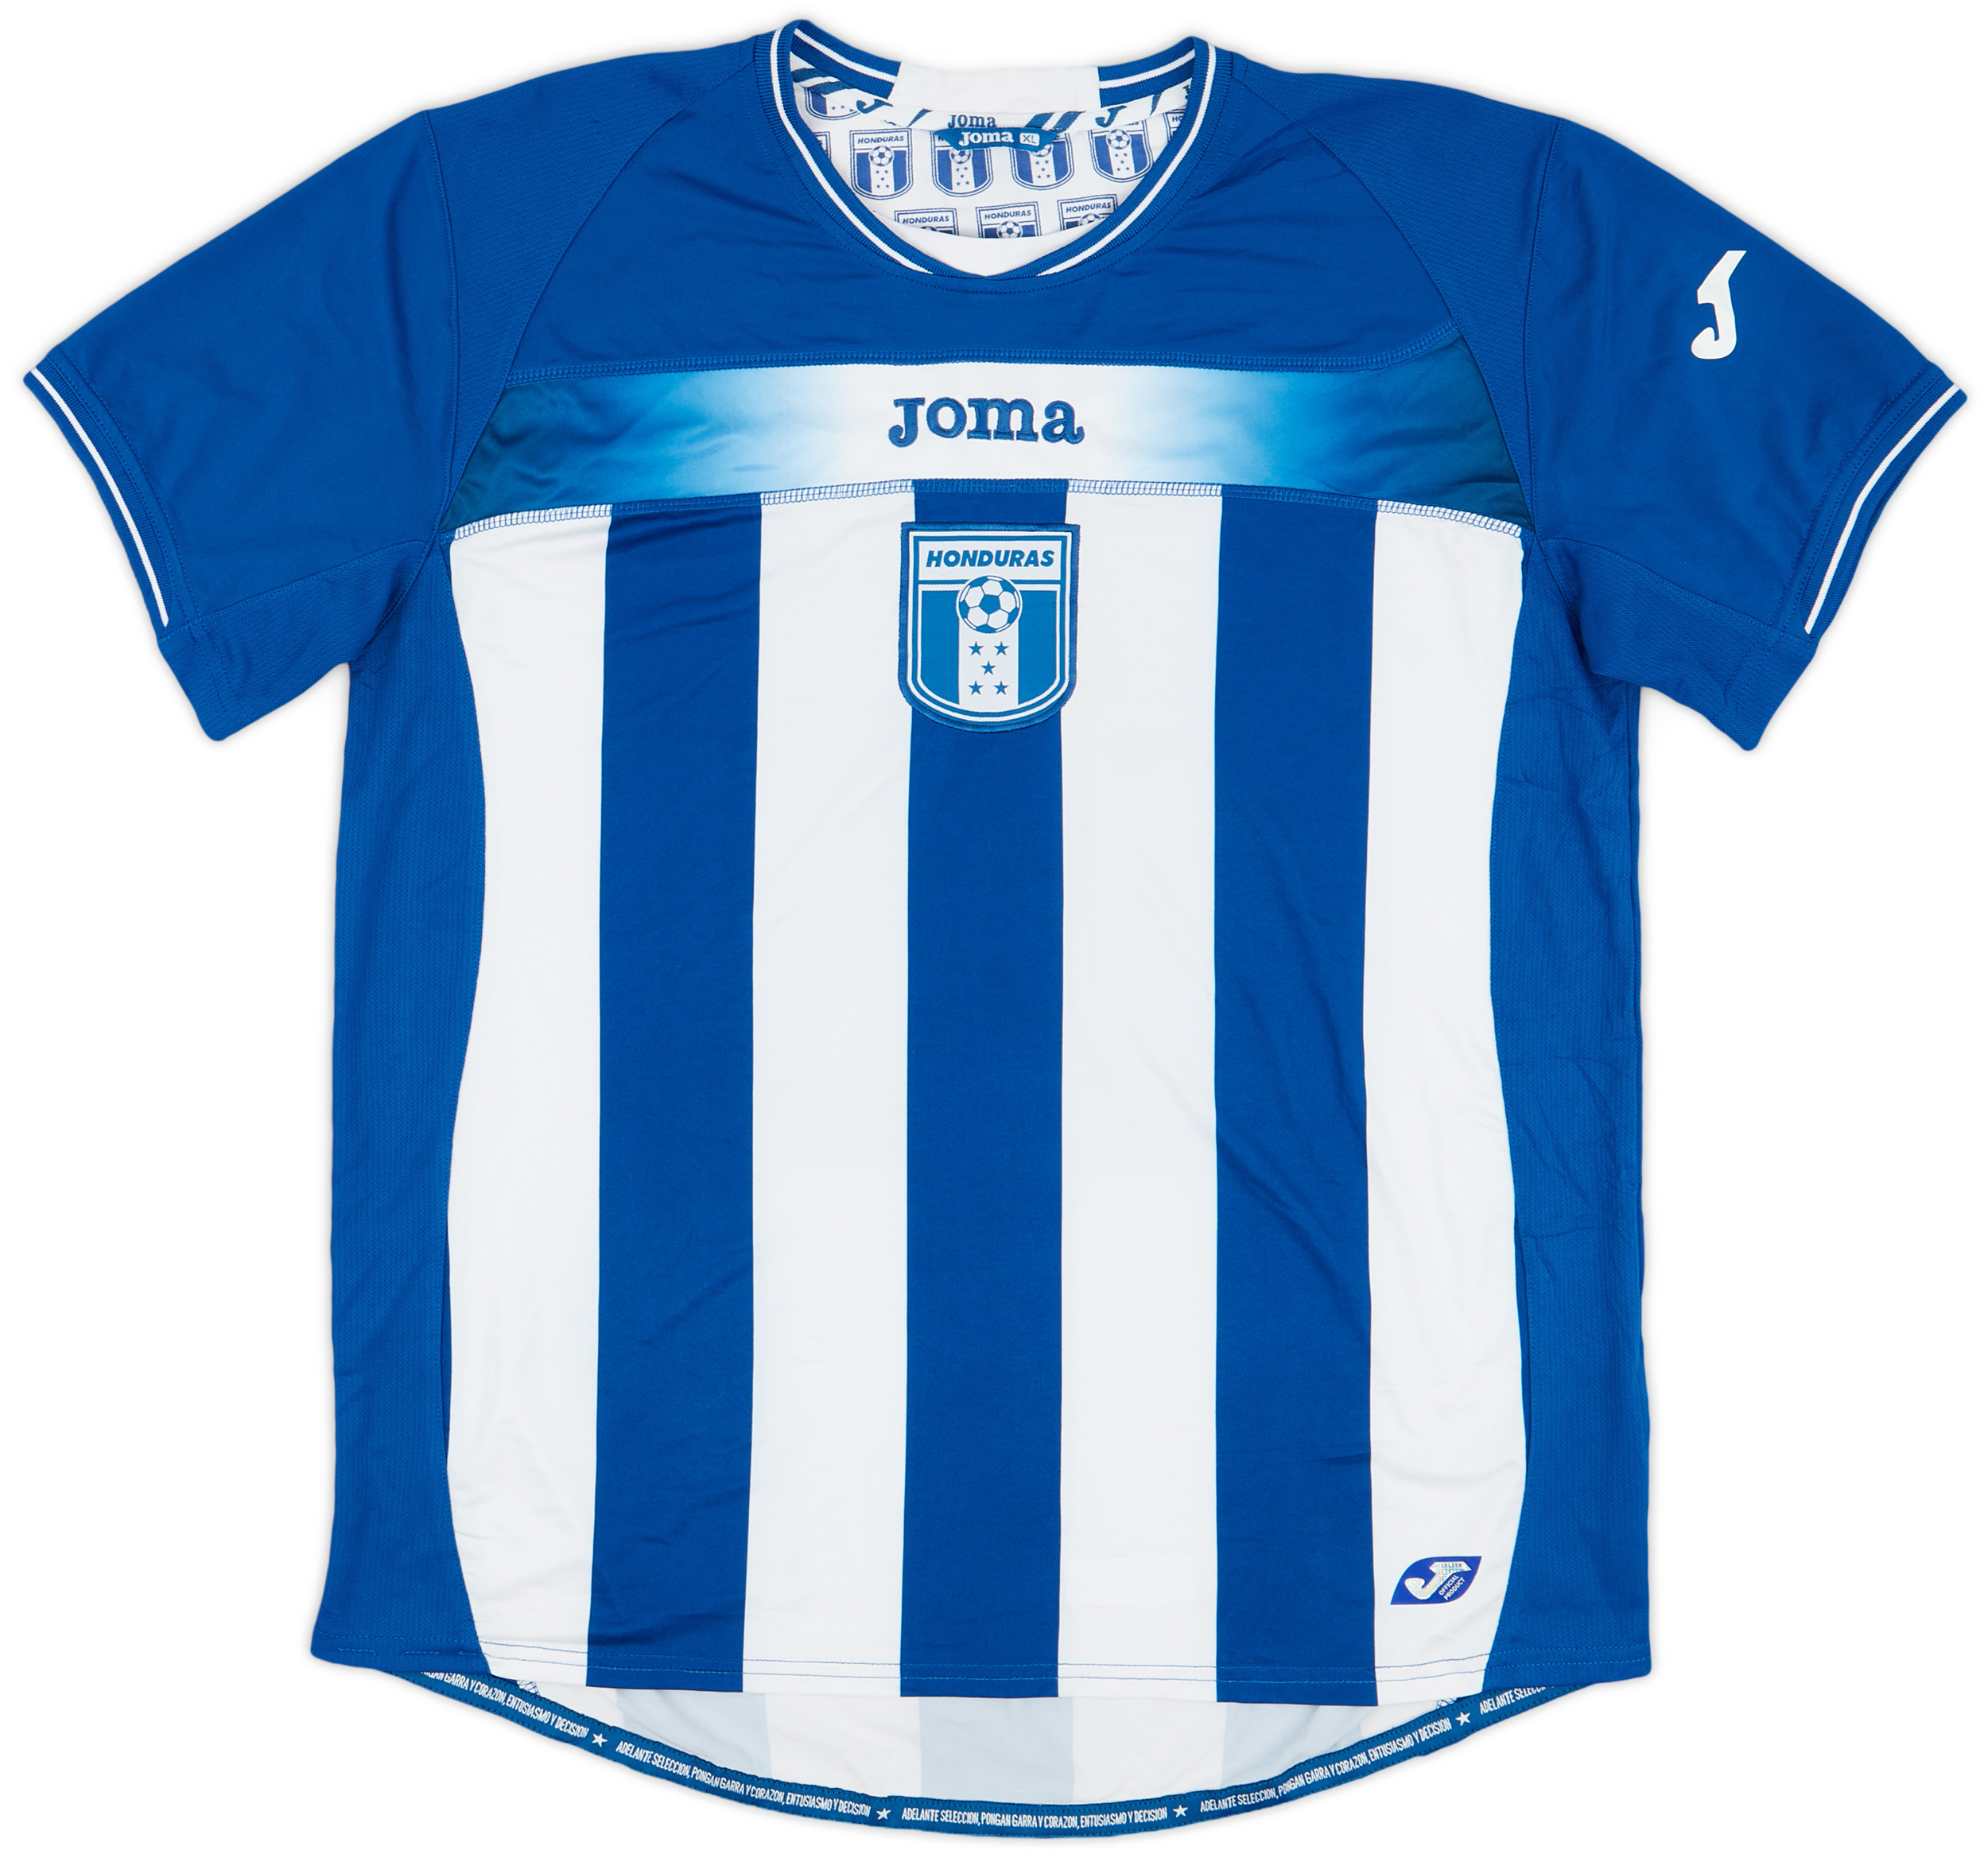 Honduras  Uit  shirt  (Original)